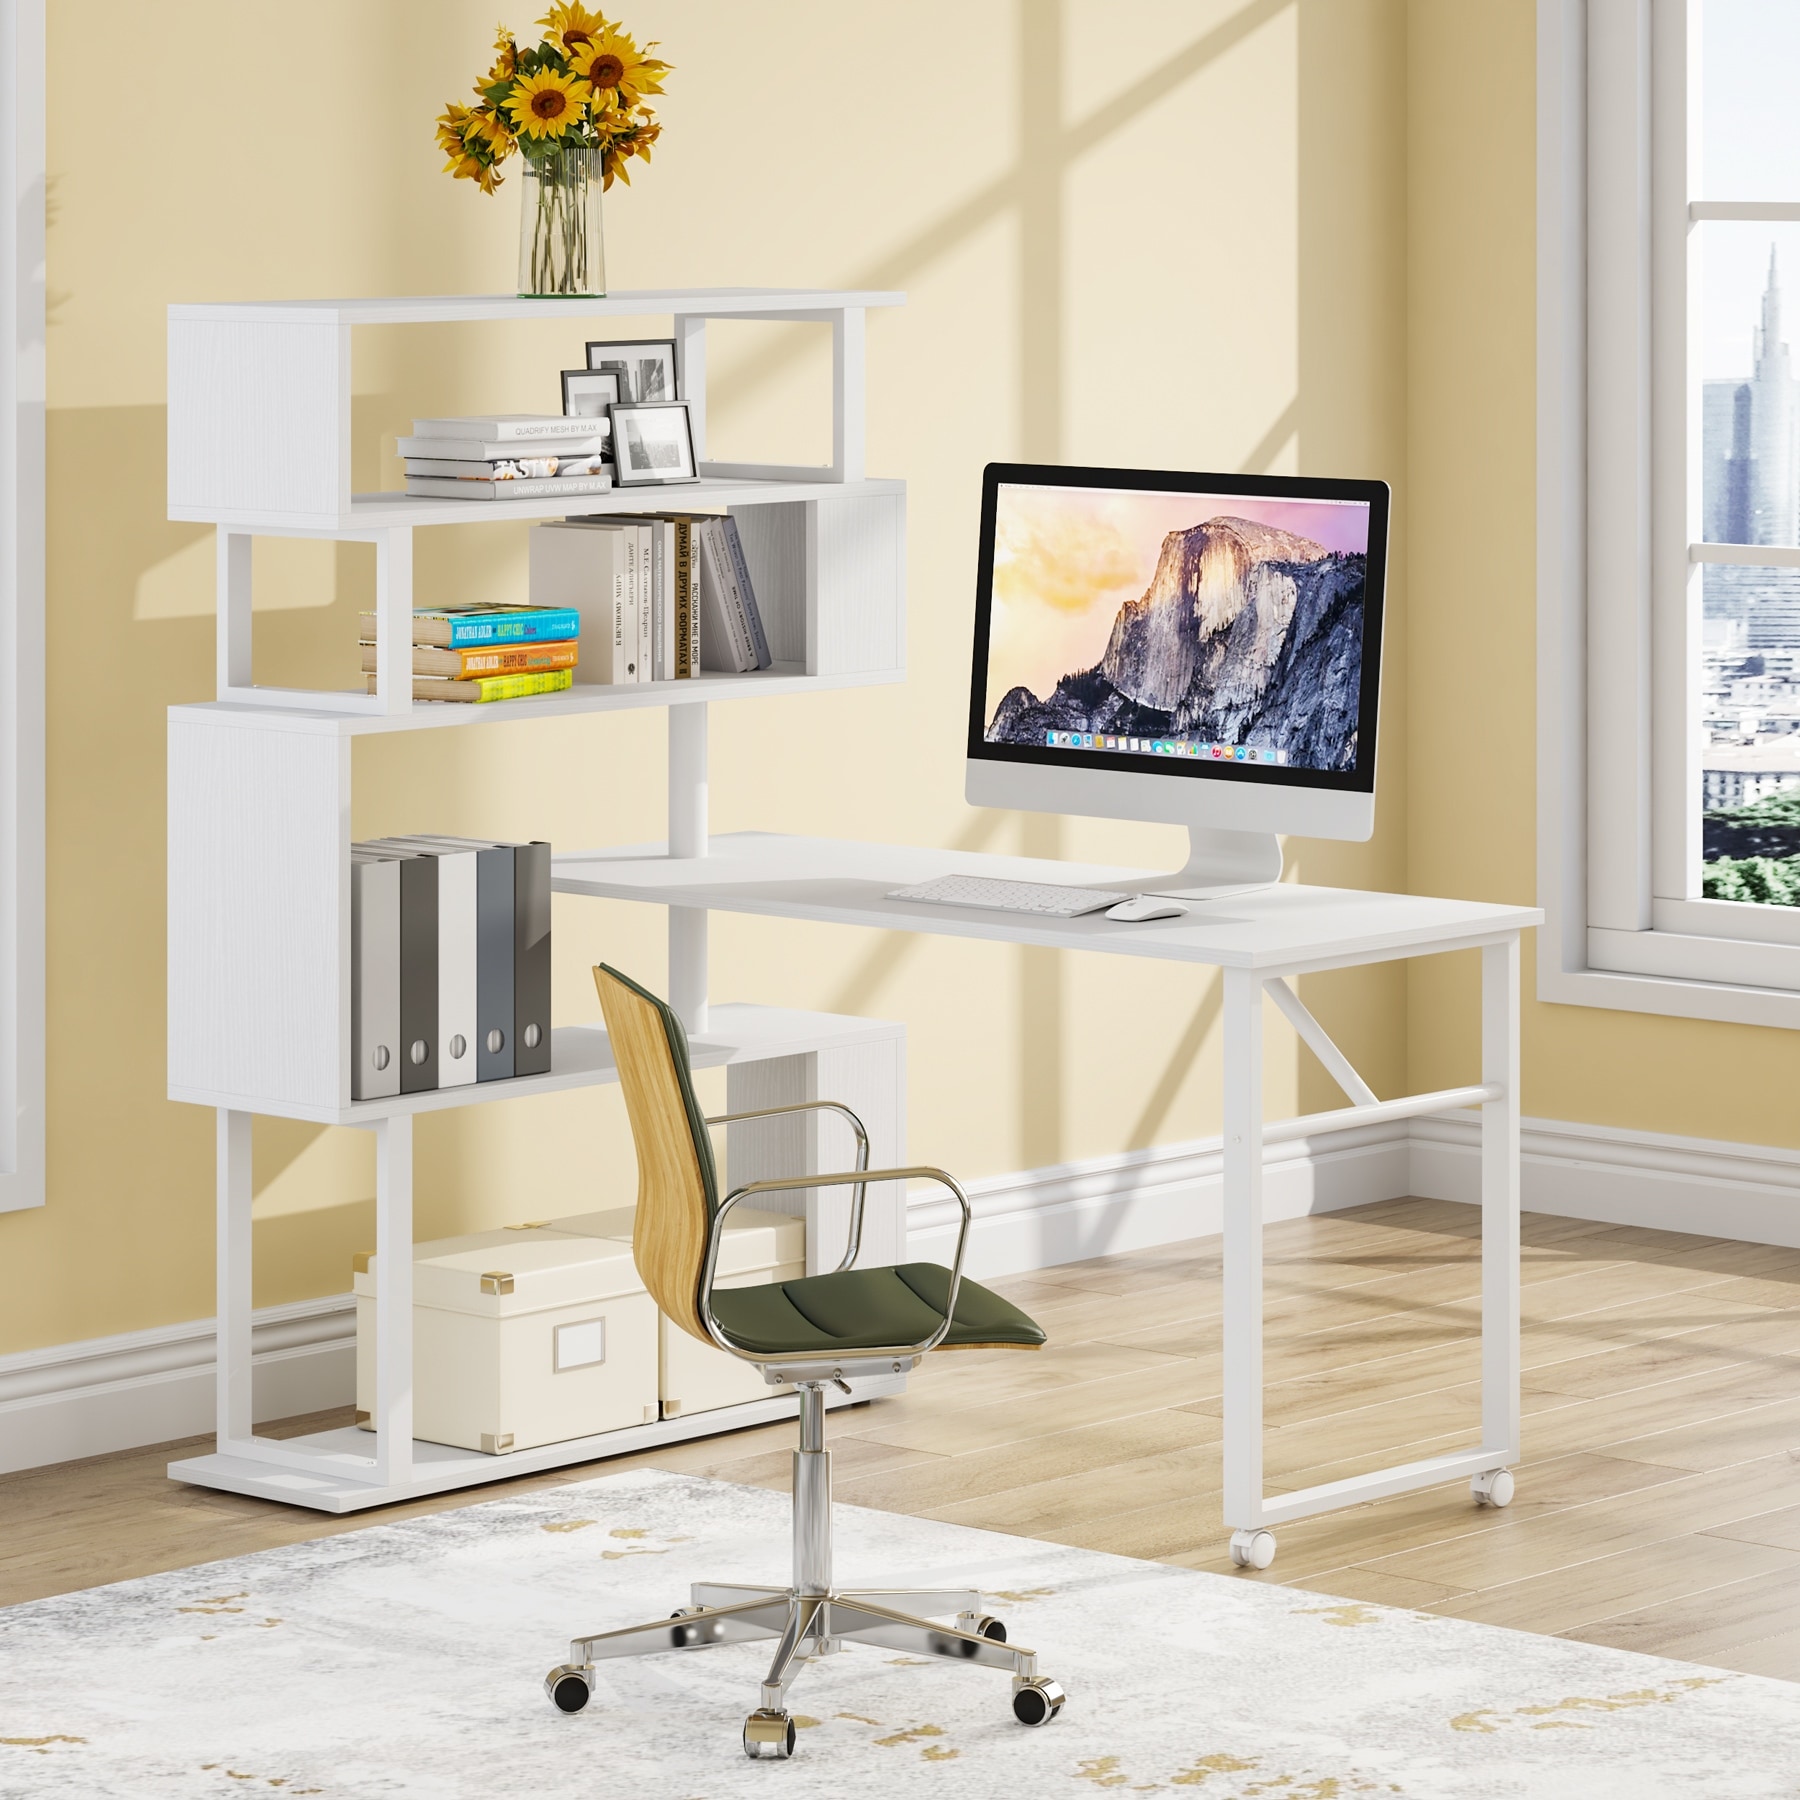 https://ak1.ostkcdn.com/images/products/is/images/direct/612e740d05fb1014f50c3ea74699fe3f6d3249bb/L-Shaped-Rotating-Computer-Desk-with-5-Shelves-Bookshelf.jpg